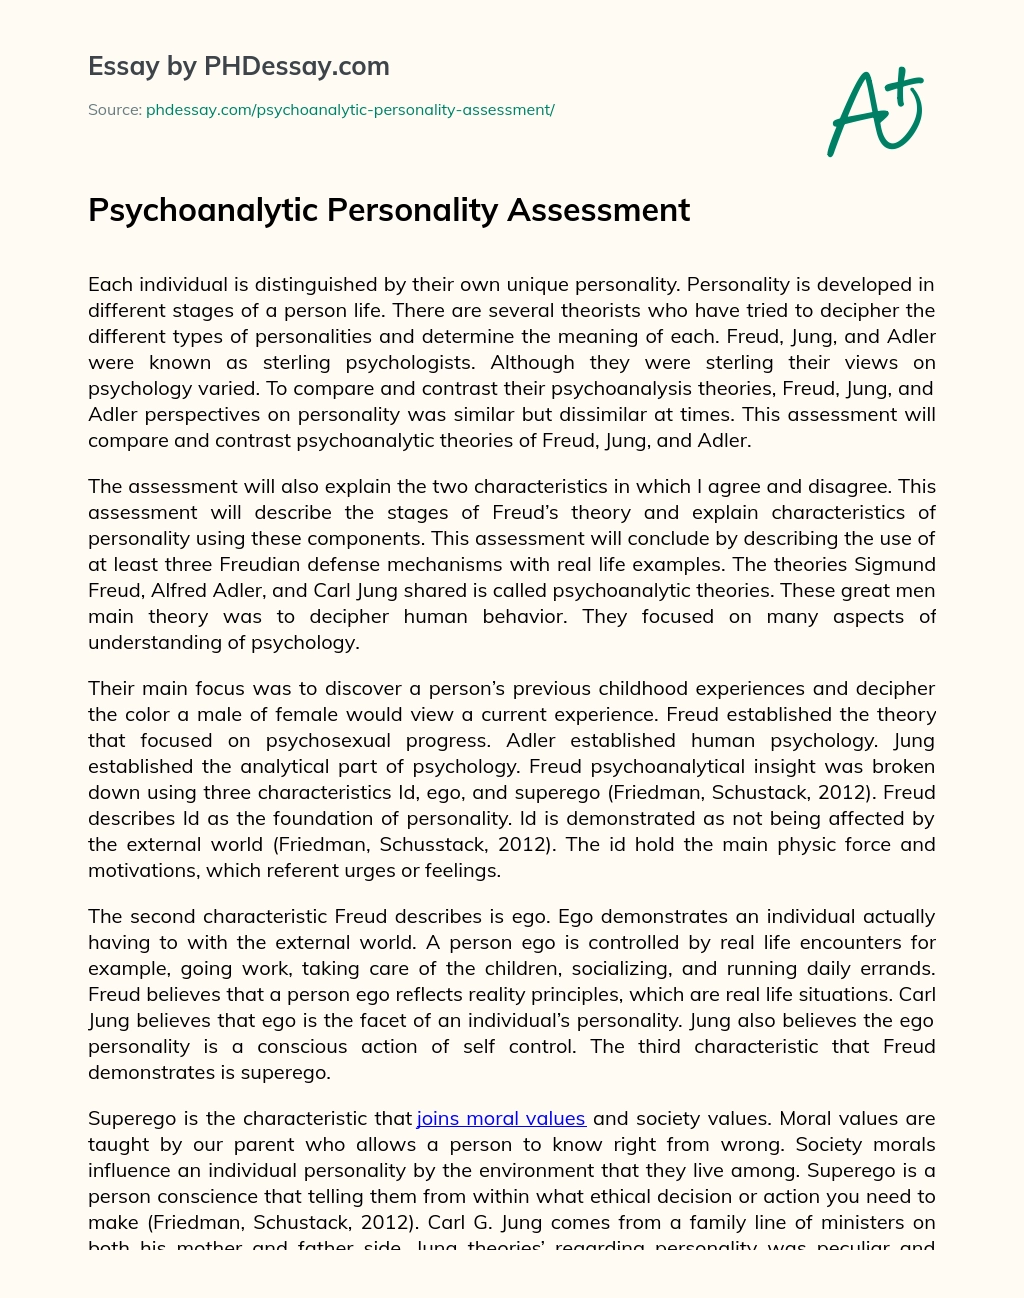 Psychoanalytic Personality Assessment essay